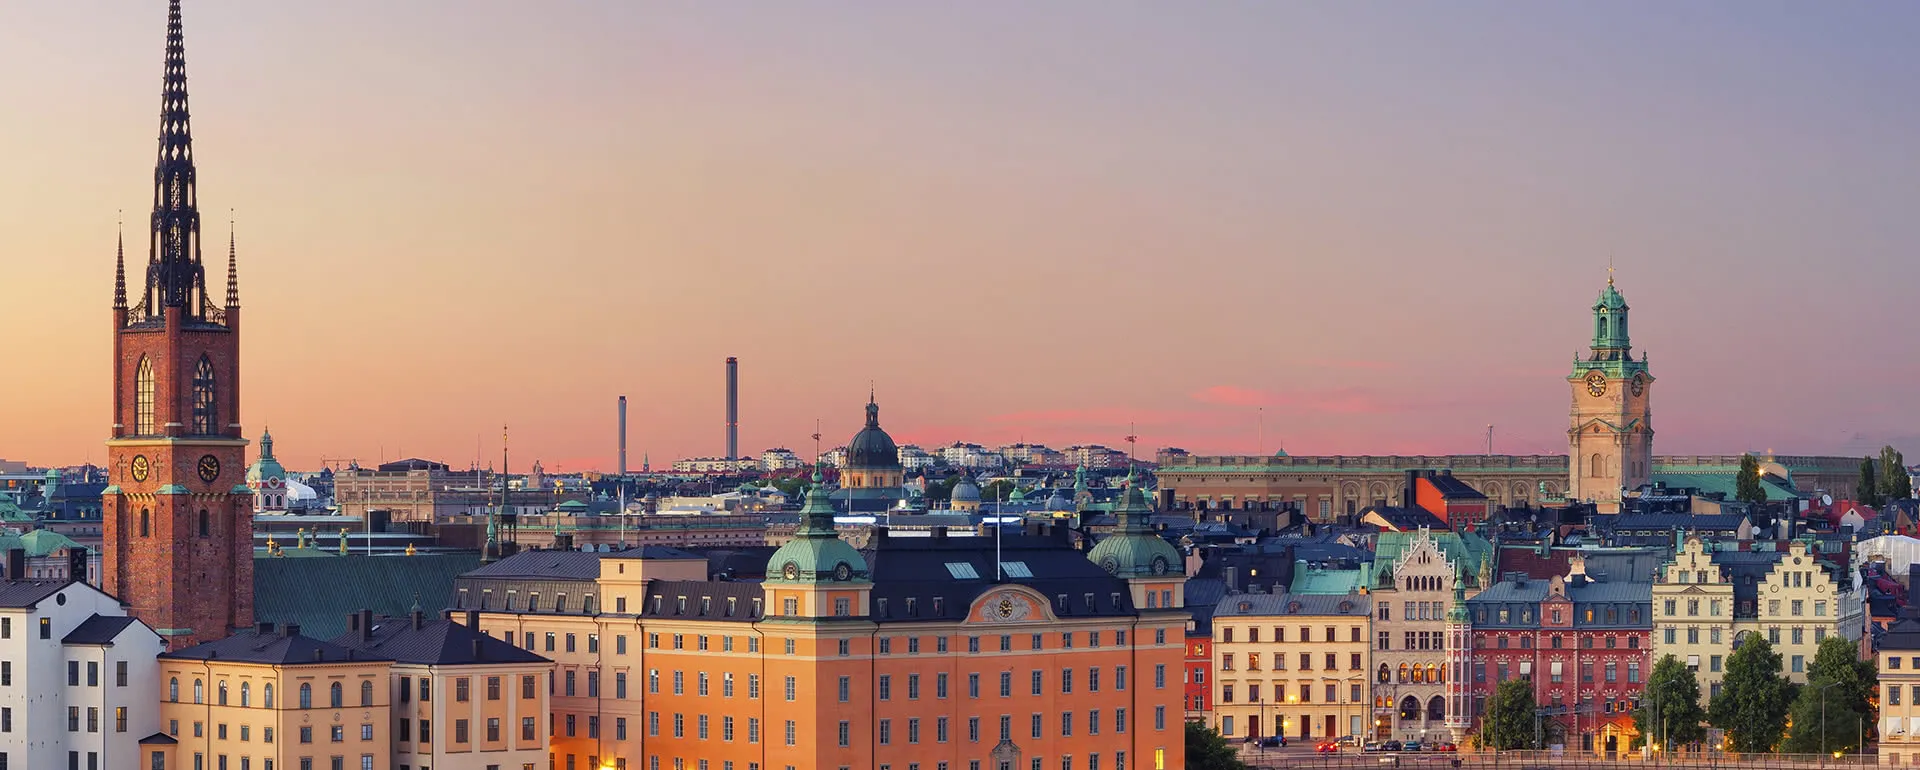 Stockholm - the destination for school trips